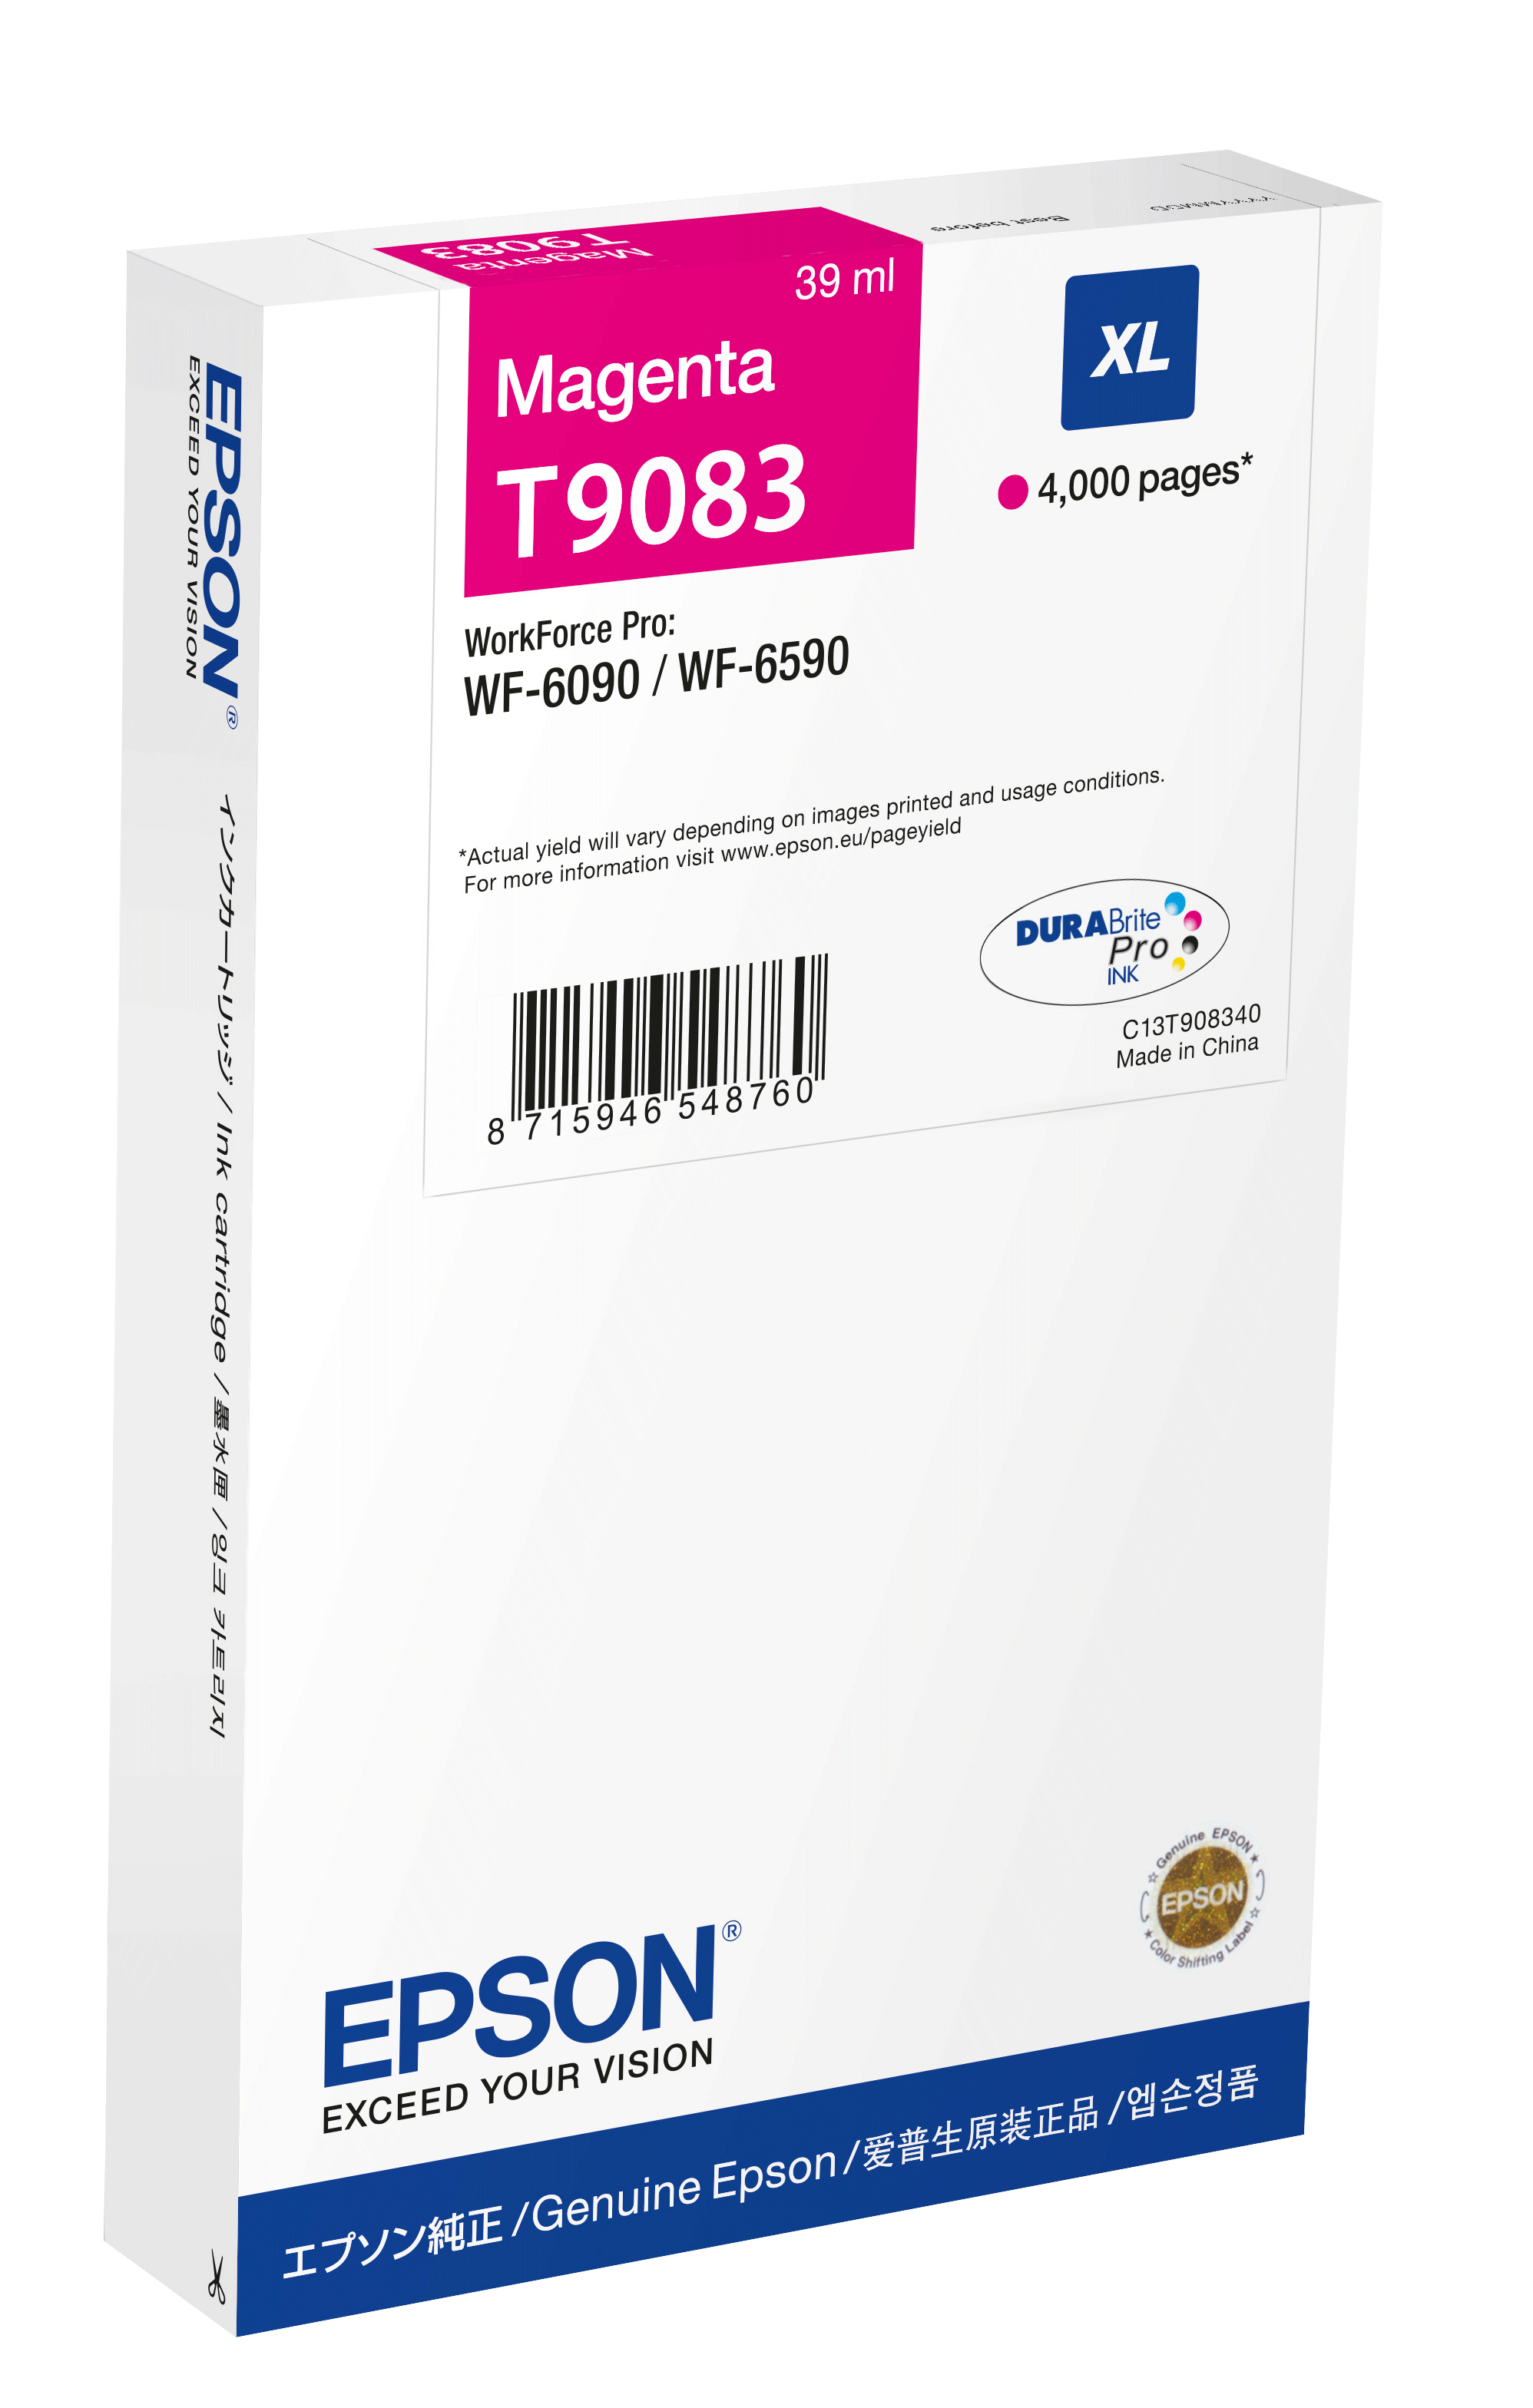 Epson Ink Cartridge XL Magenta single pack / magenta